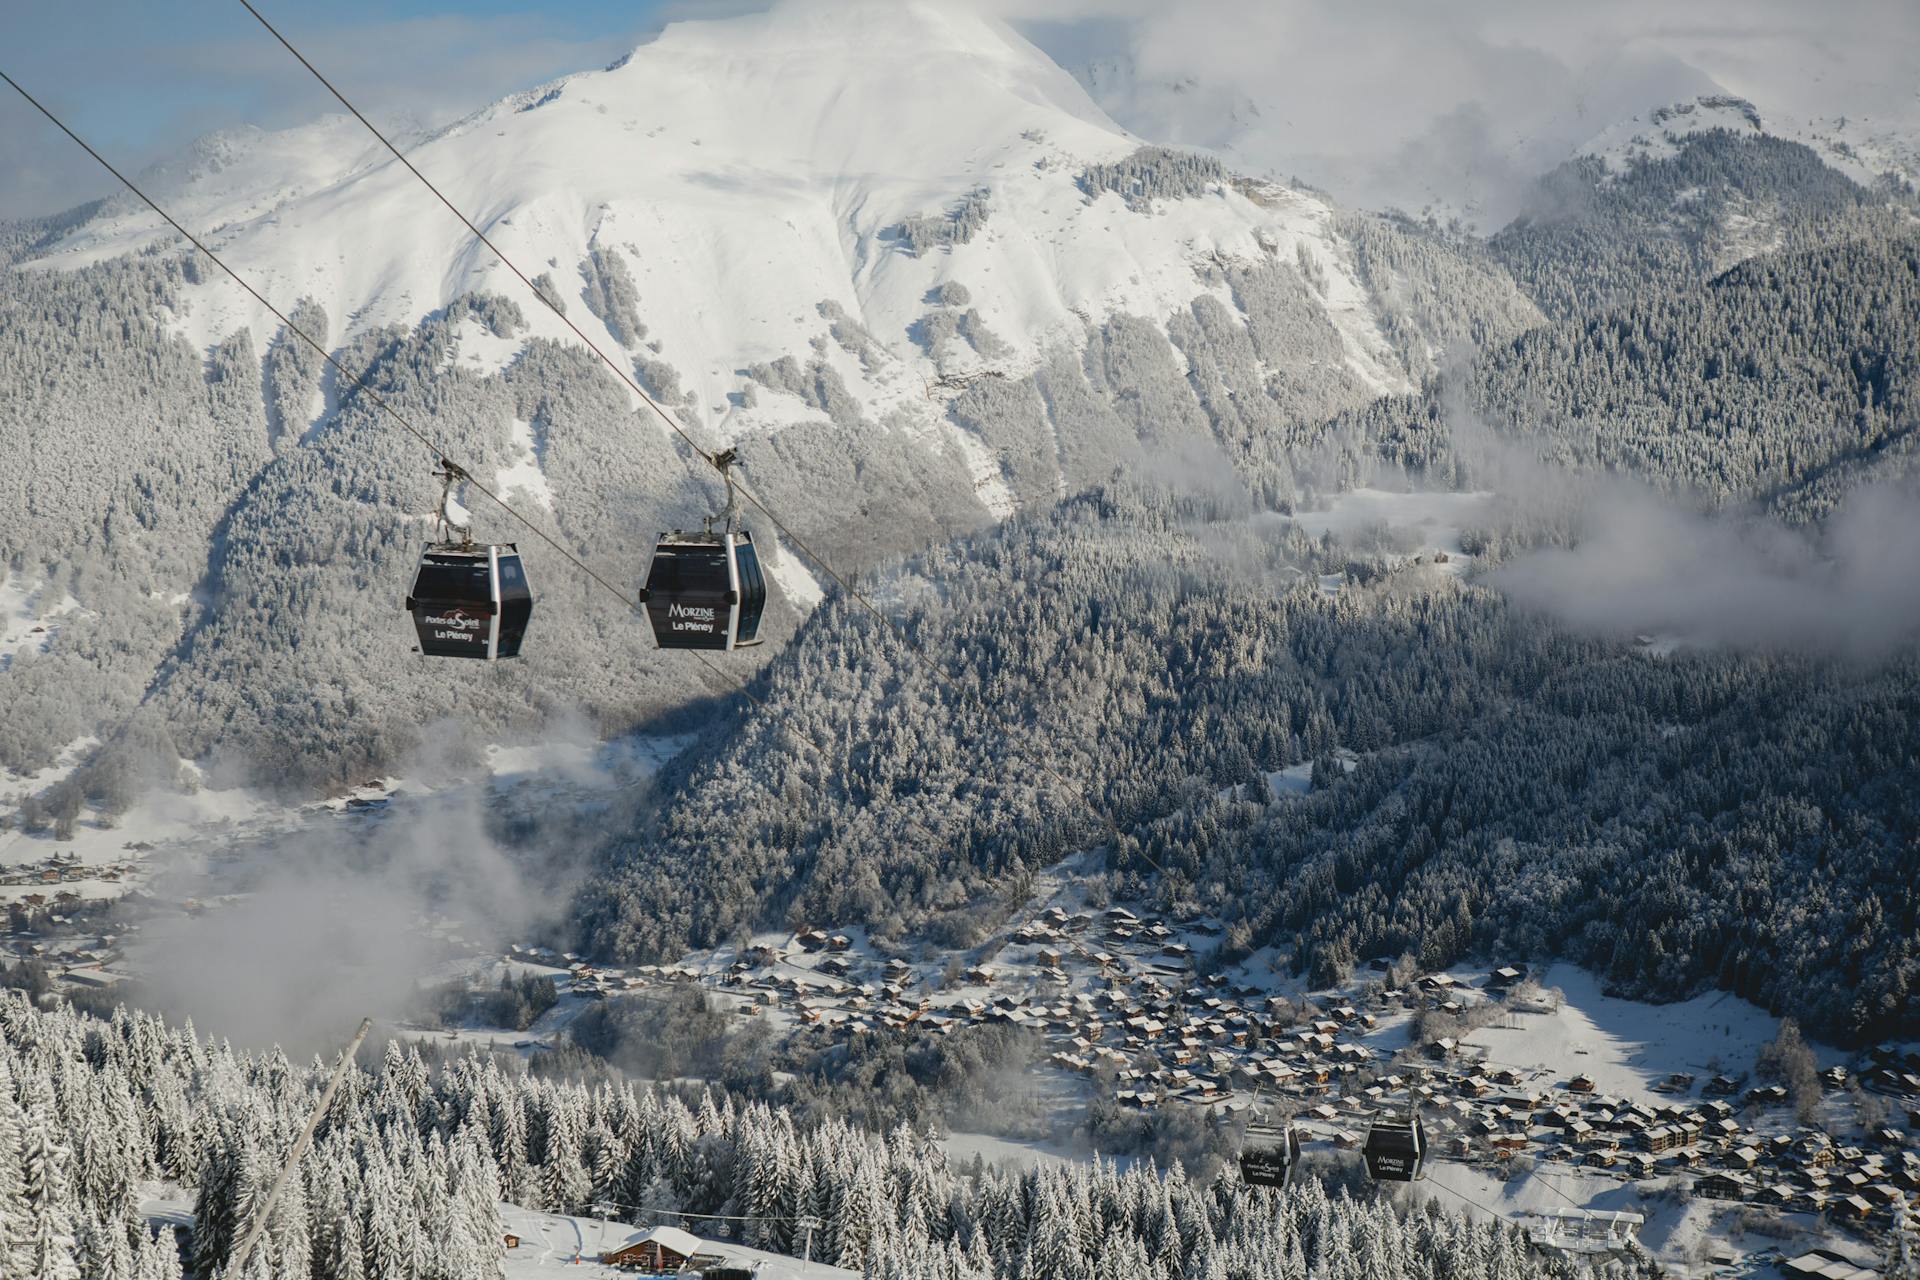 Gondolas taking skiiers to top of snowy mountain in Morzine French Alps